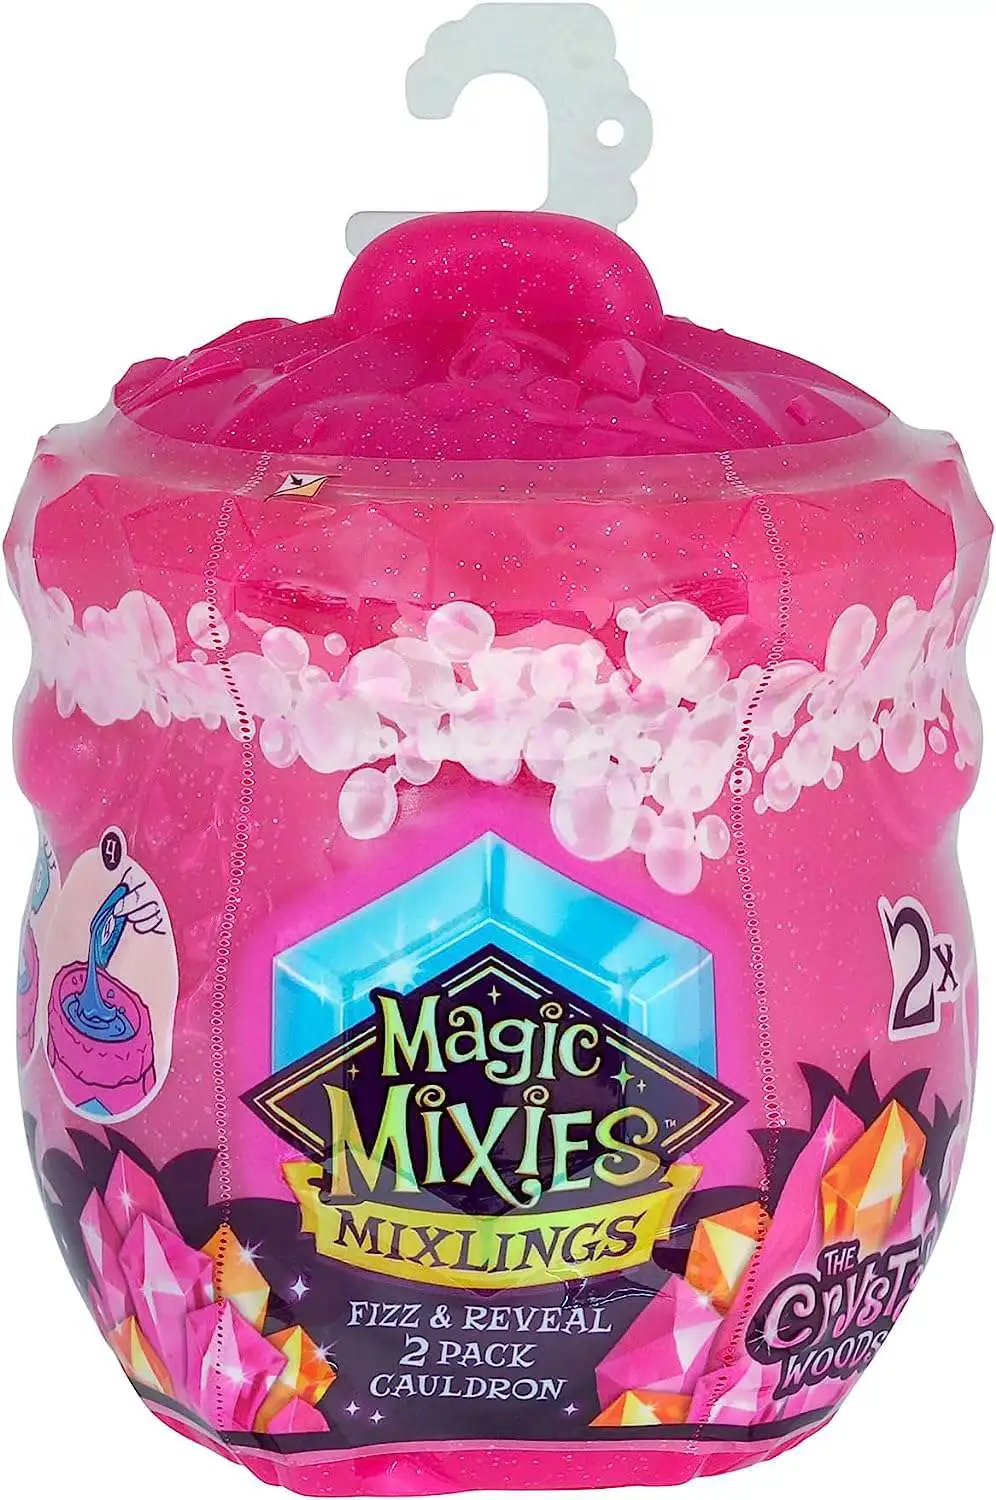  Magic Mixies Mixlings Sparkle Magic Mega 4 Pack, Magic